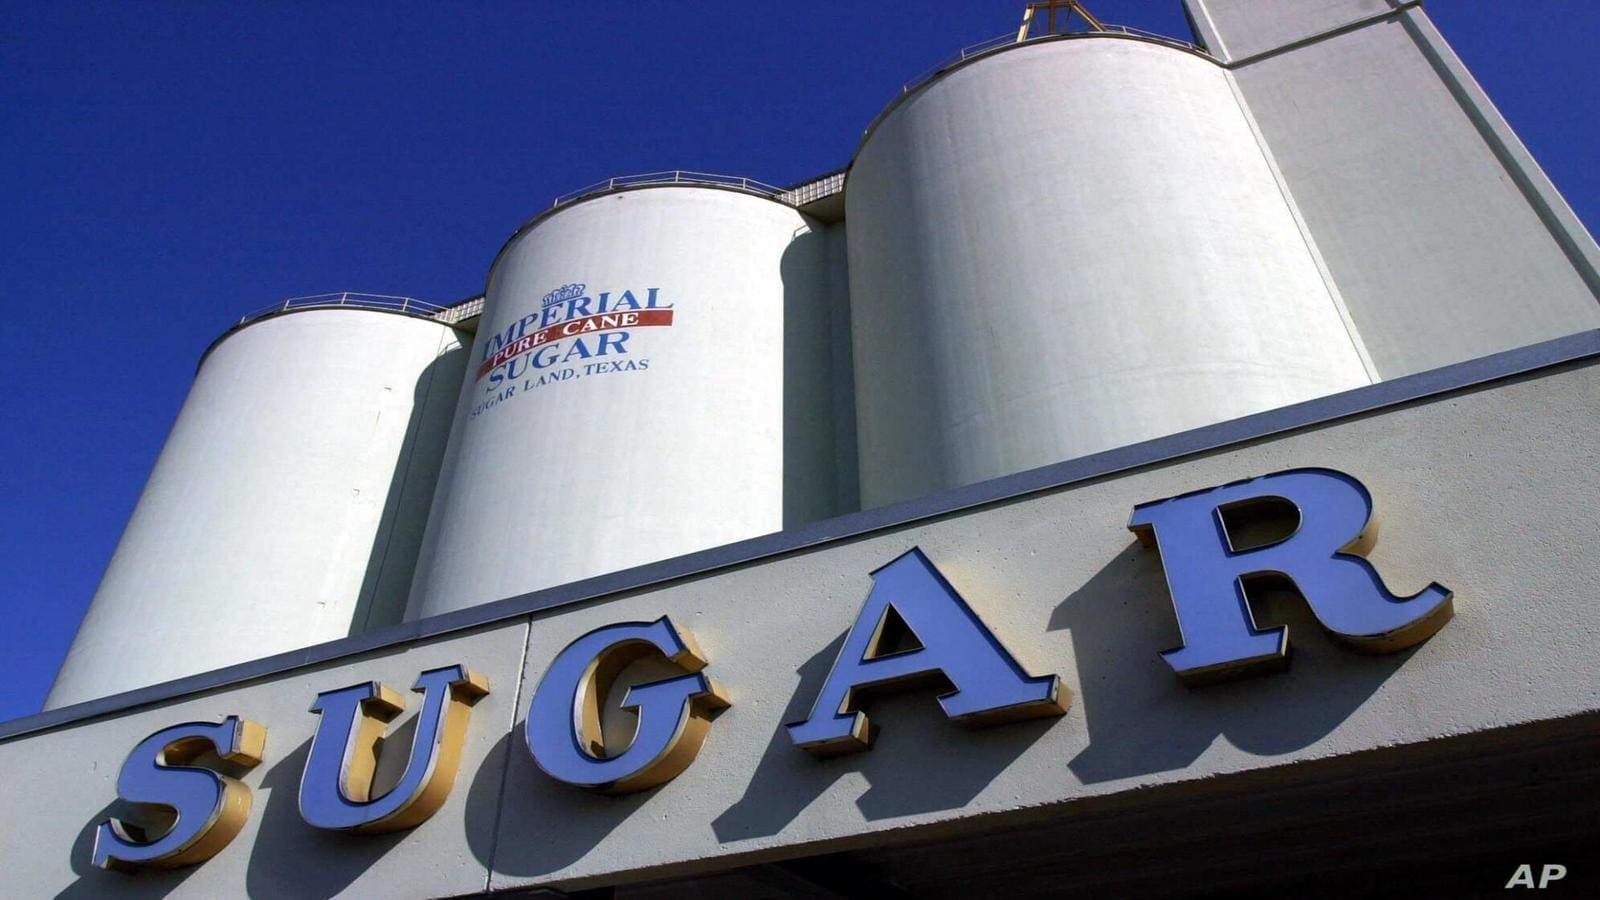 Louis Dreyfus sells US sugar business to focus on global sugar trading business